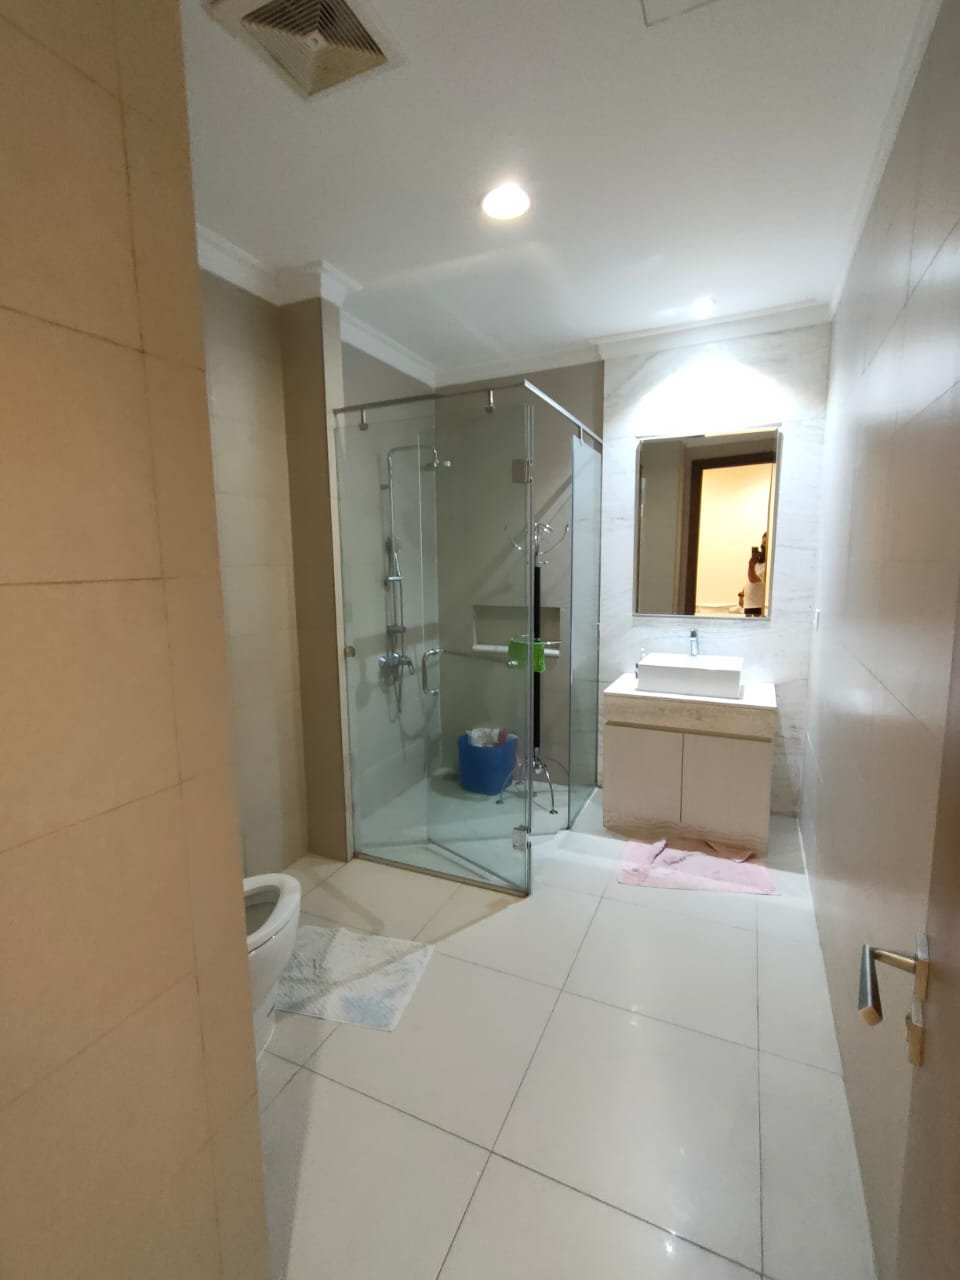 Sale! Apartemen Residences 8 Senopati Jakarta Selatan – 2 BR Fully Furnished, Middle Floor, Swimming Pool View